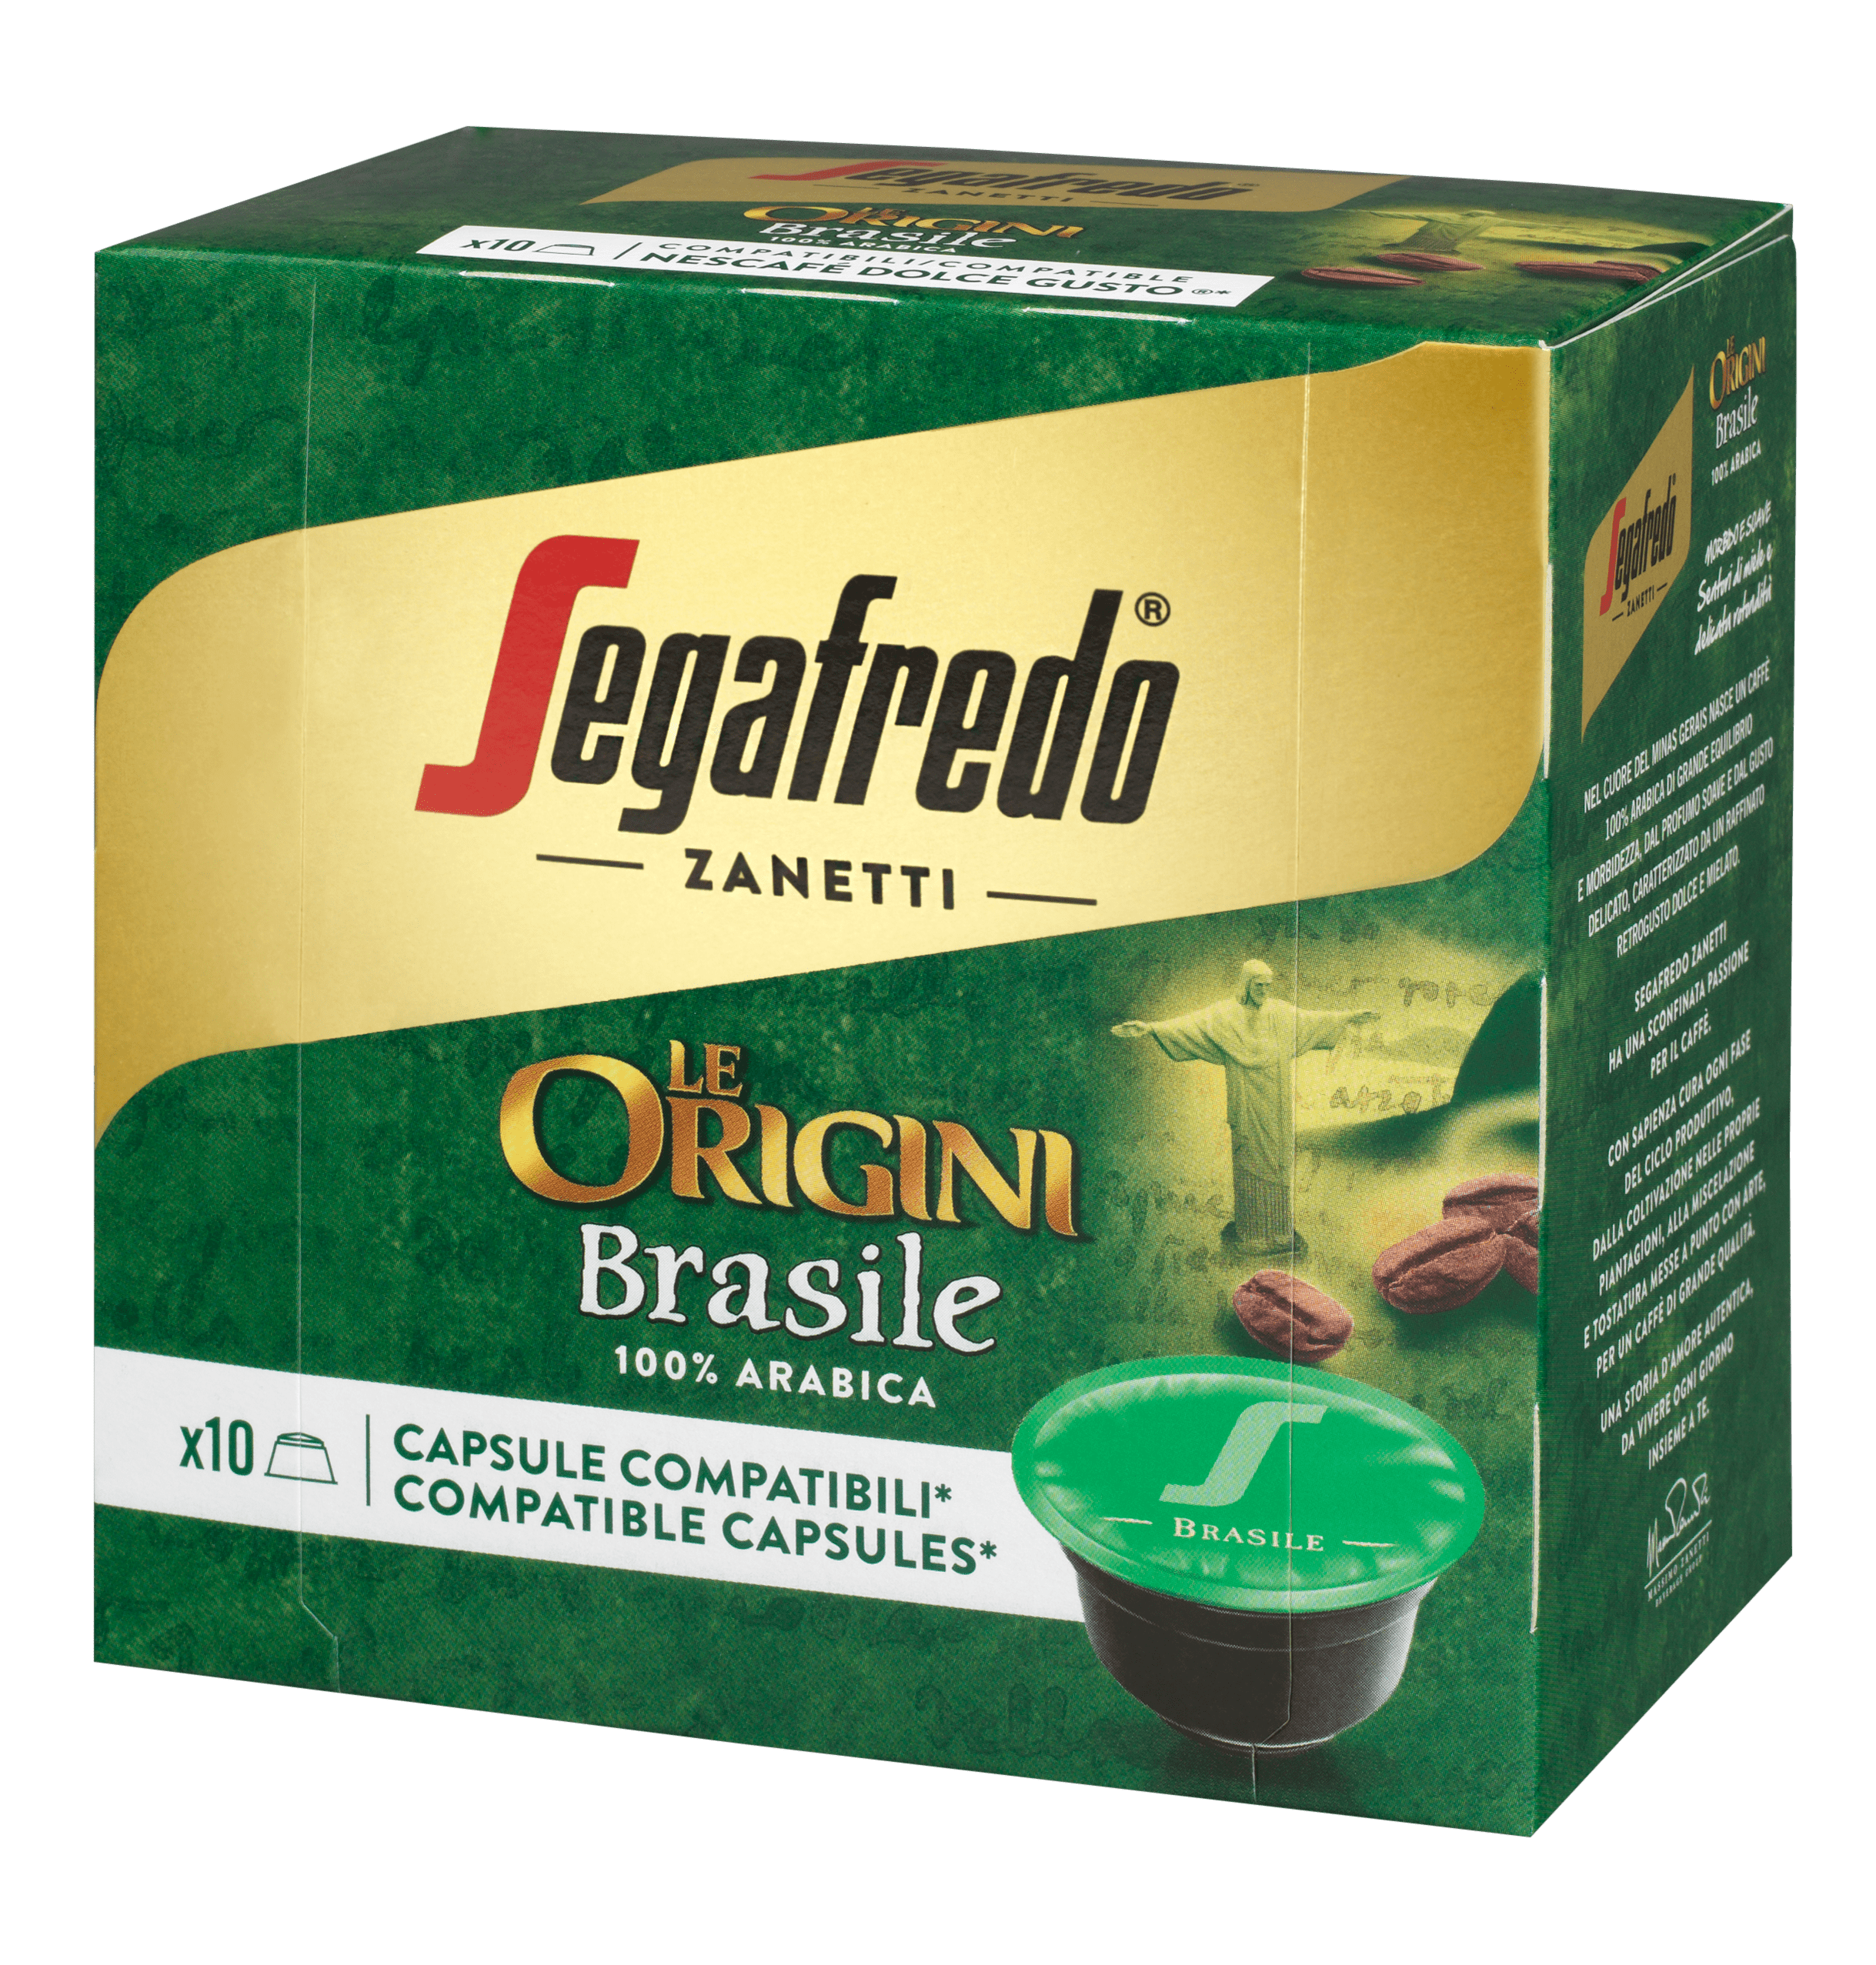 SEGAFREDO ZANETTI - [100% ARABICA (SINGLE ORIGIN)] BRASILE COFFEE CAPSULE